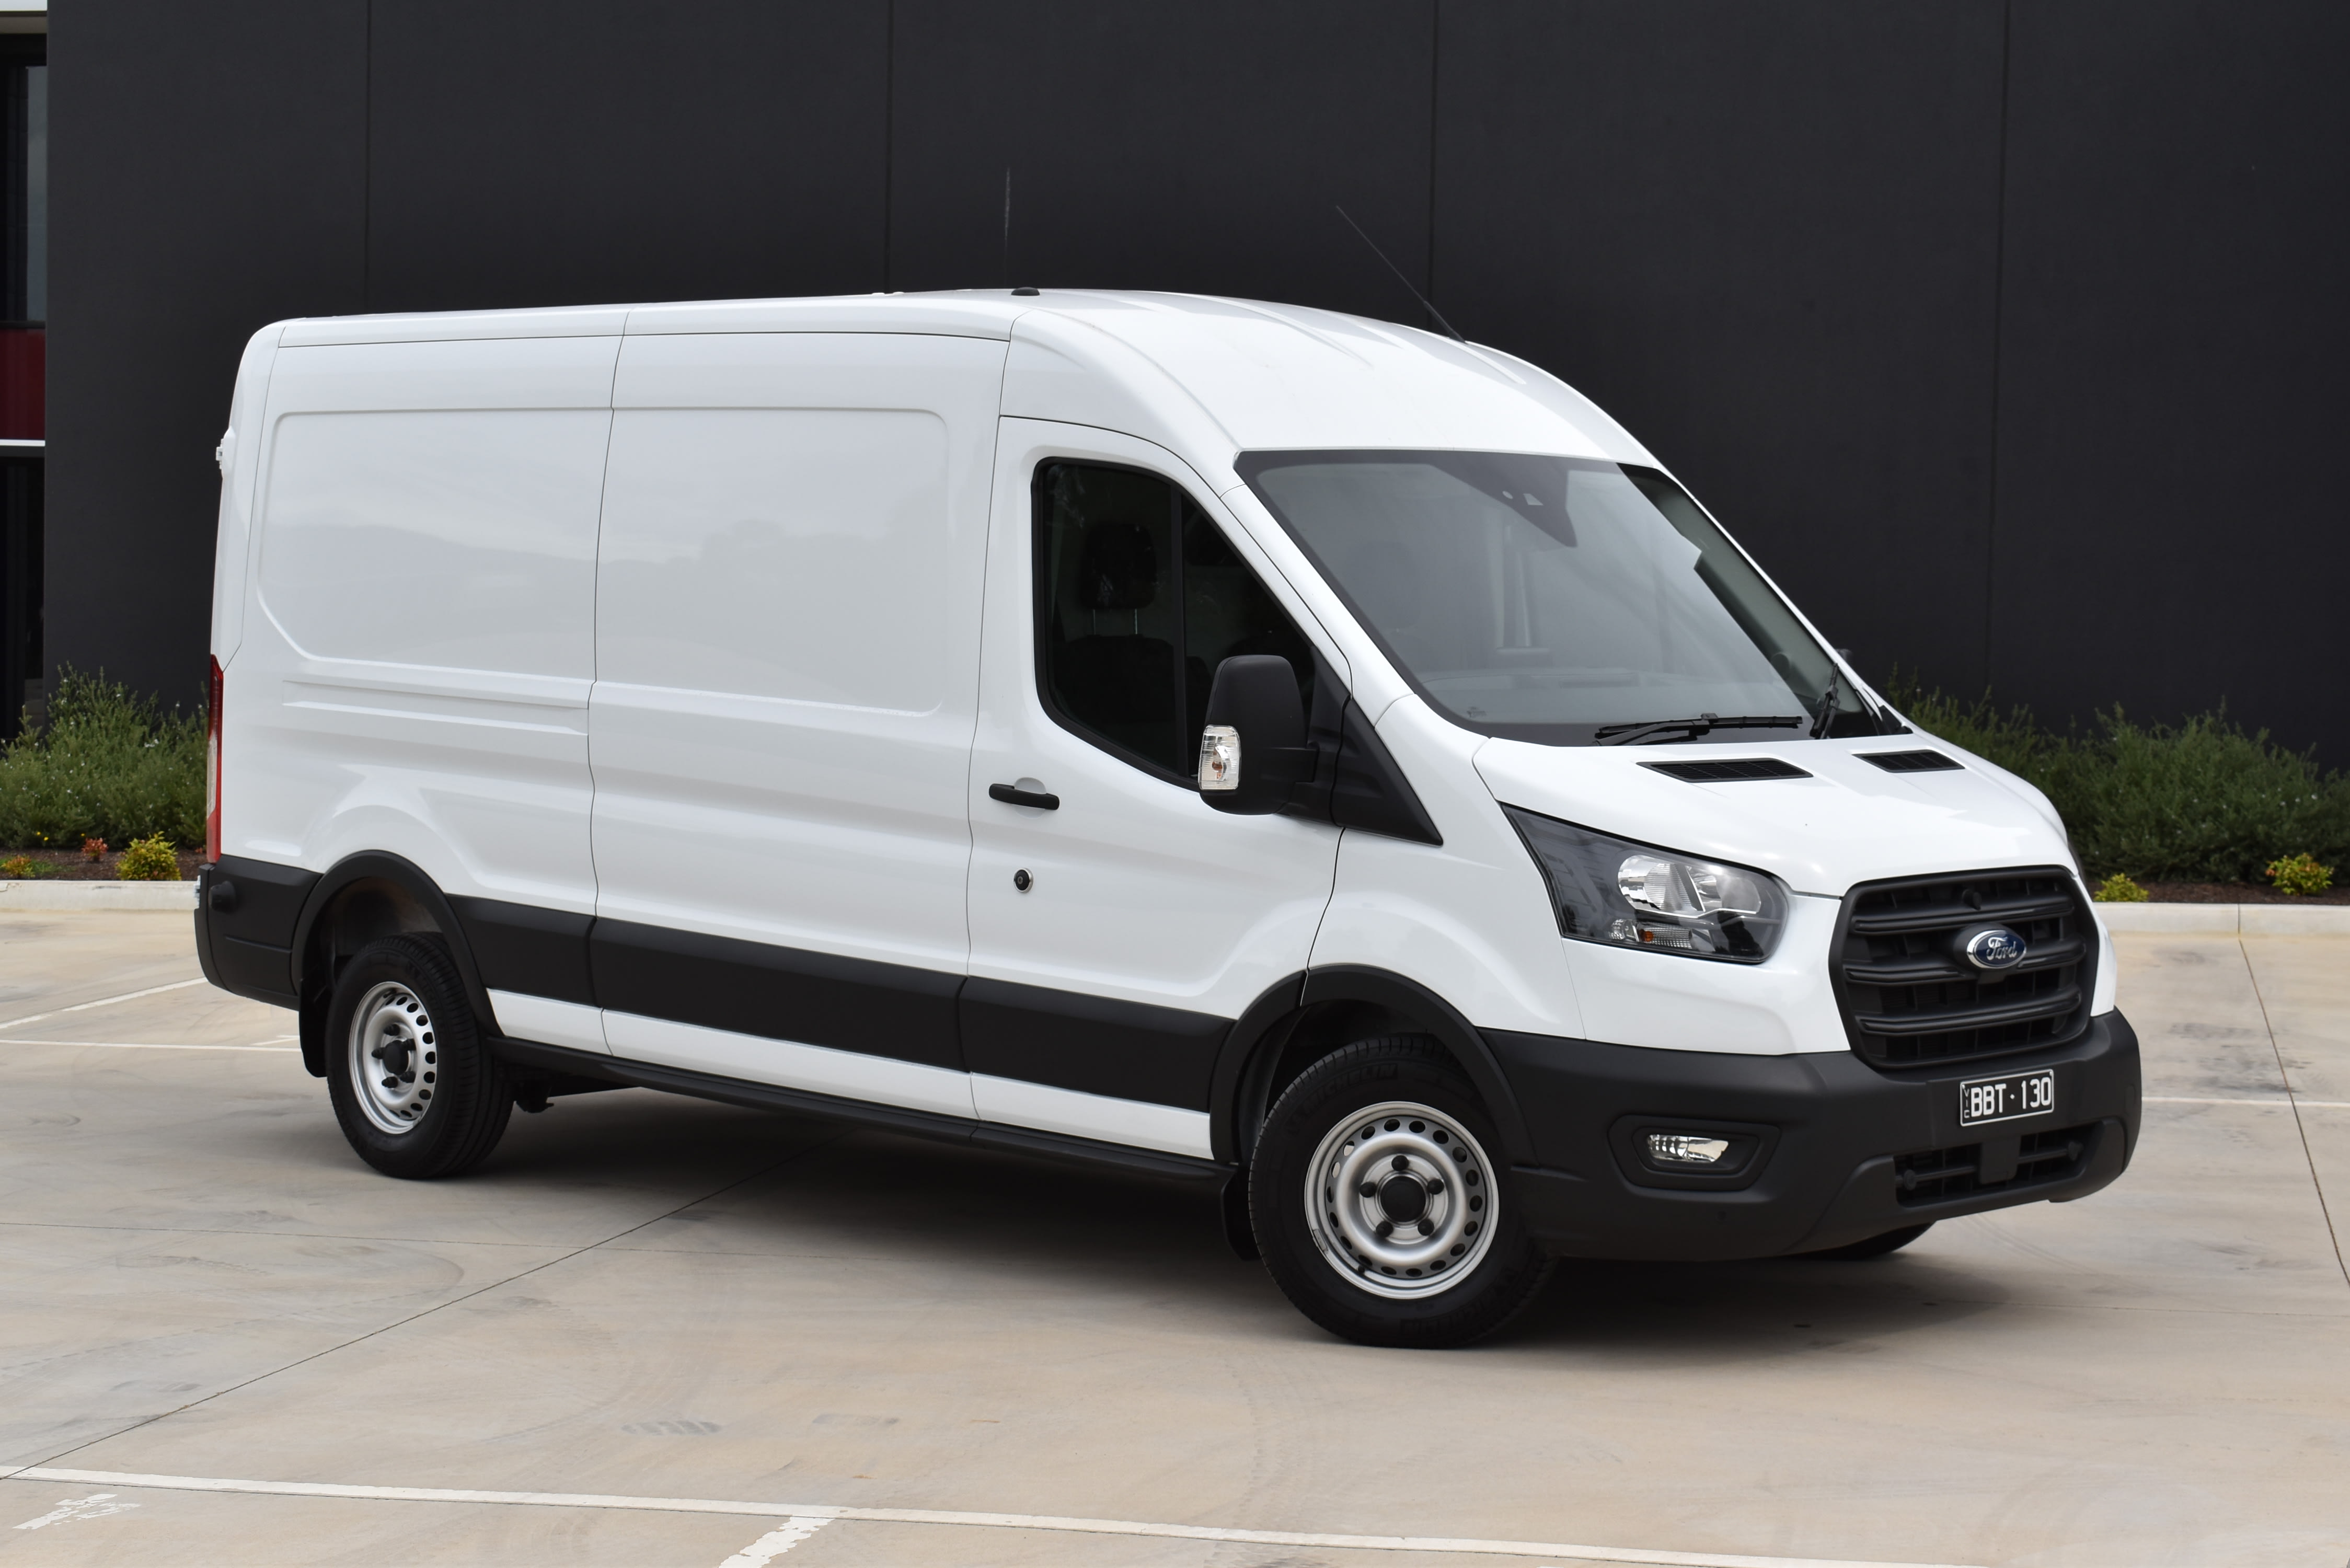 Ford Transit 2020 review 350L LWB FWD Van GVM test